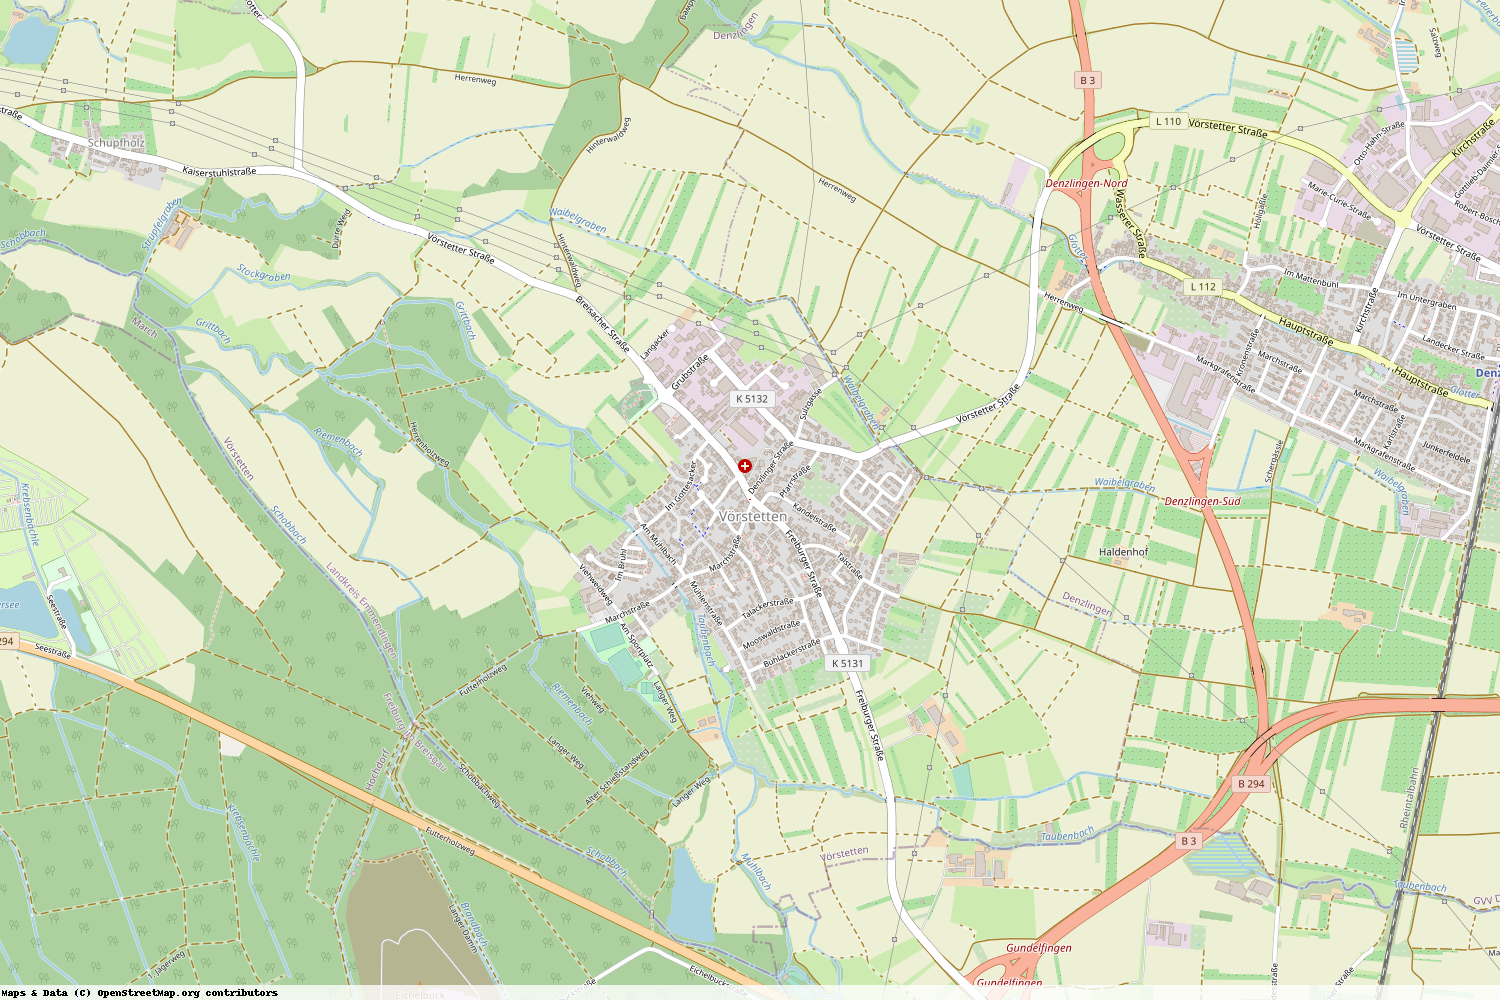 Ist gerade Stromausfall in Baden-Württemberg - Emmendingen - Vörstetten?